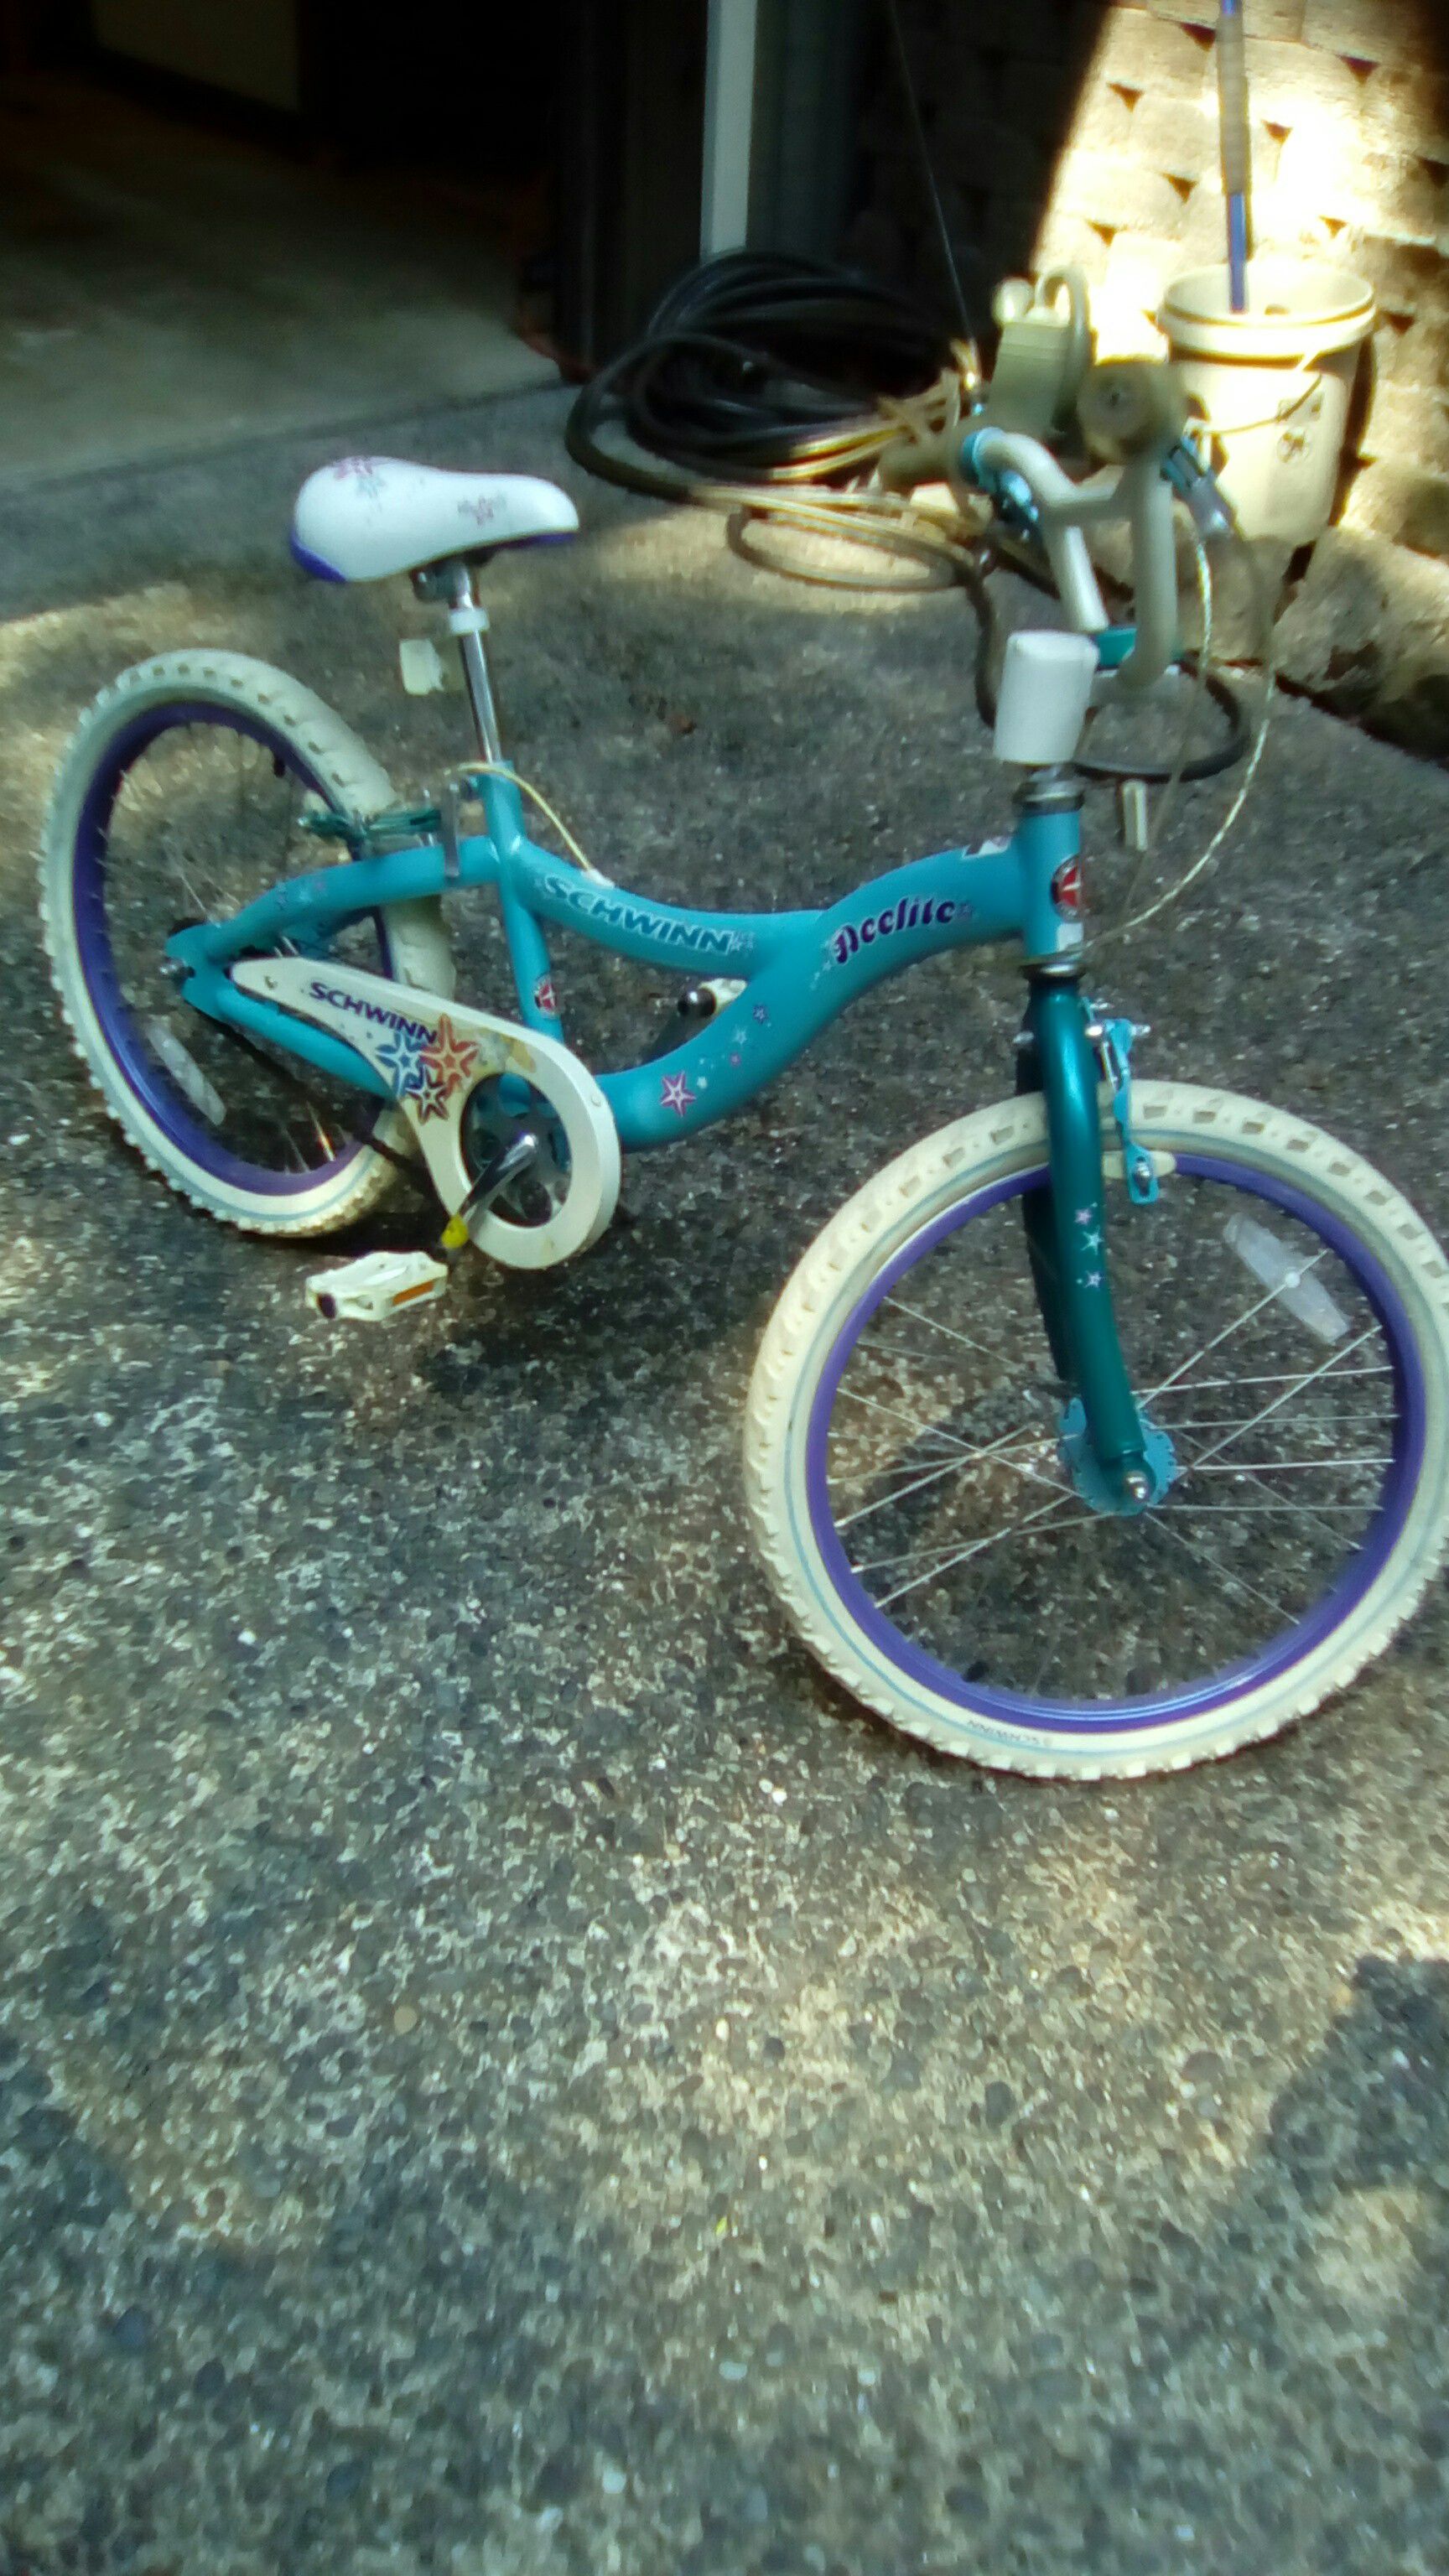 Bike Girl's $15